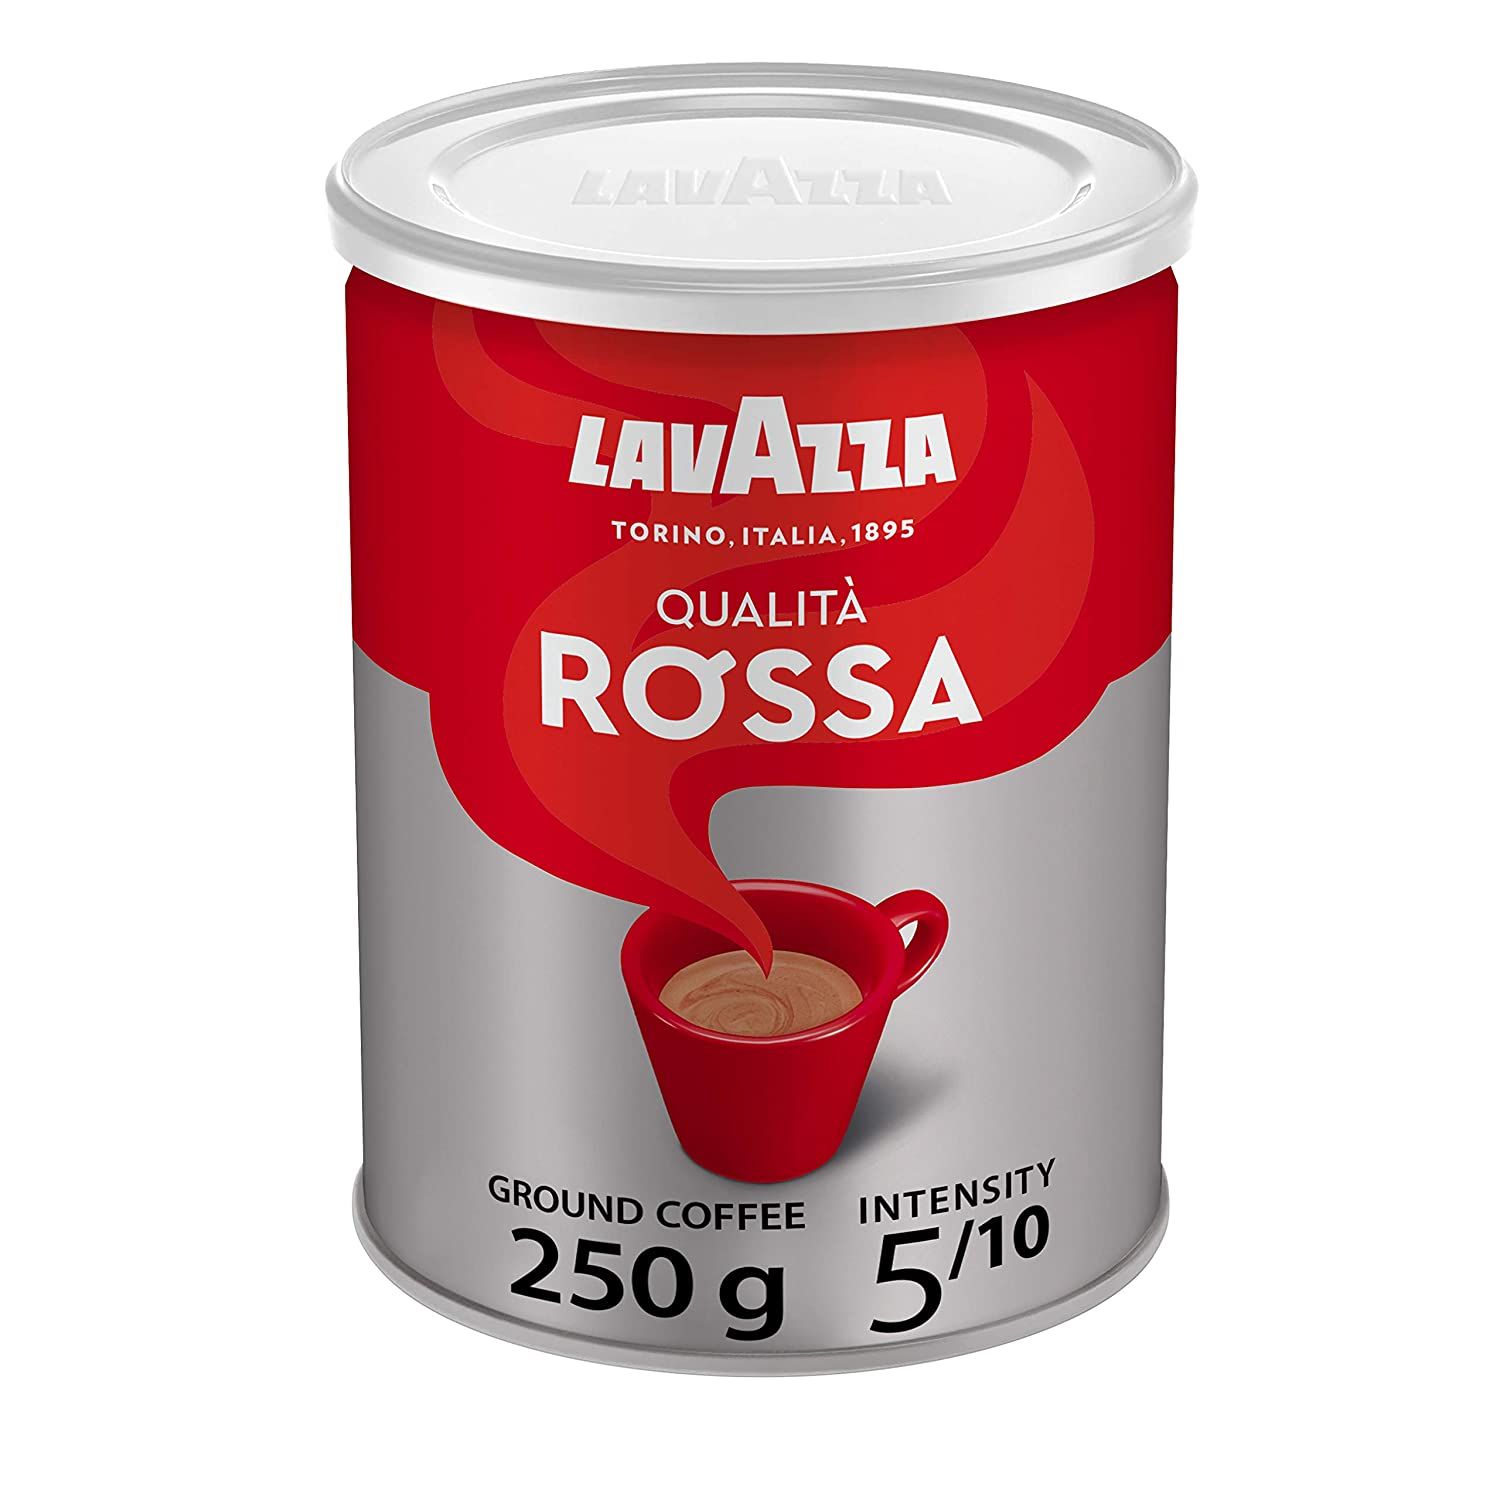 Lavazza Qualita Rossa Ground Coffee Powder Image